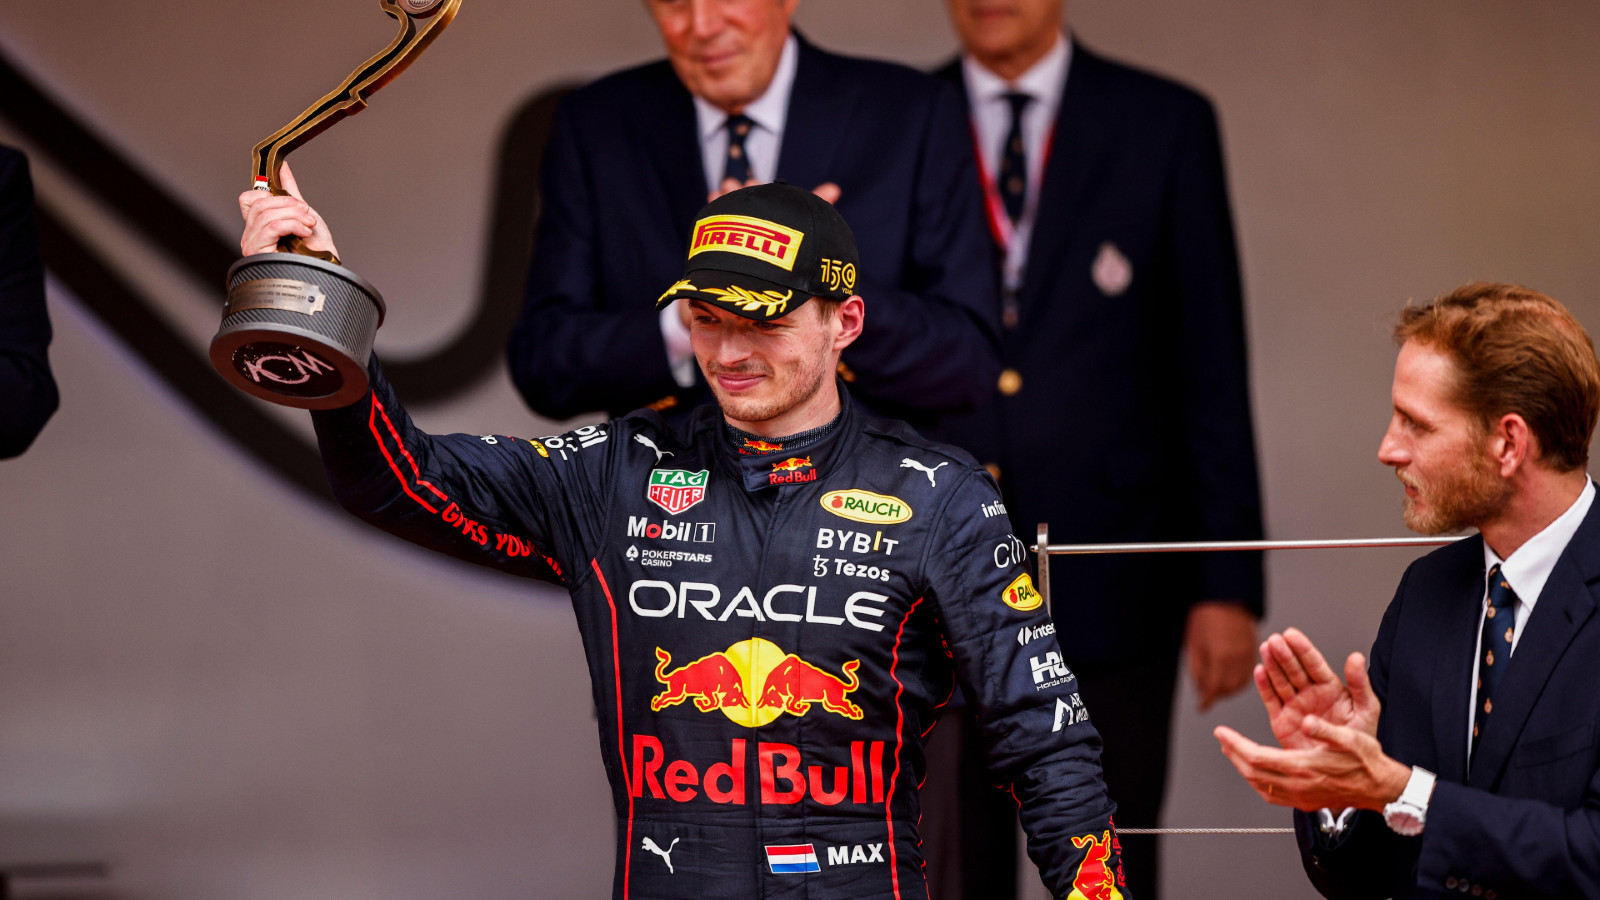 Red Bull's Max Verstappen on the podium at the Monaco Grand Prix. Monte Carlo, May 2022.